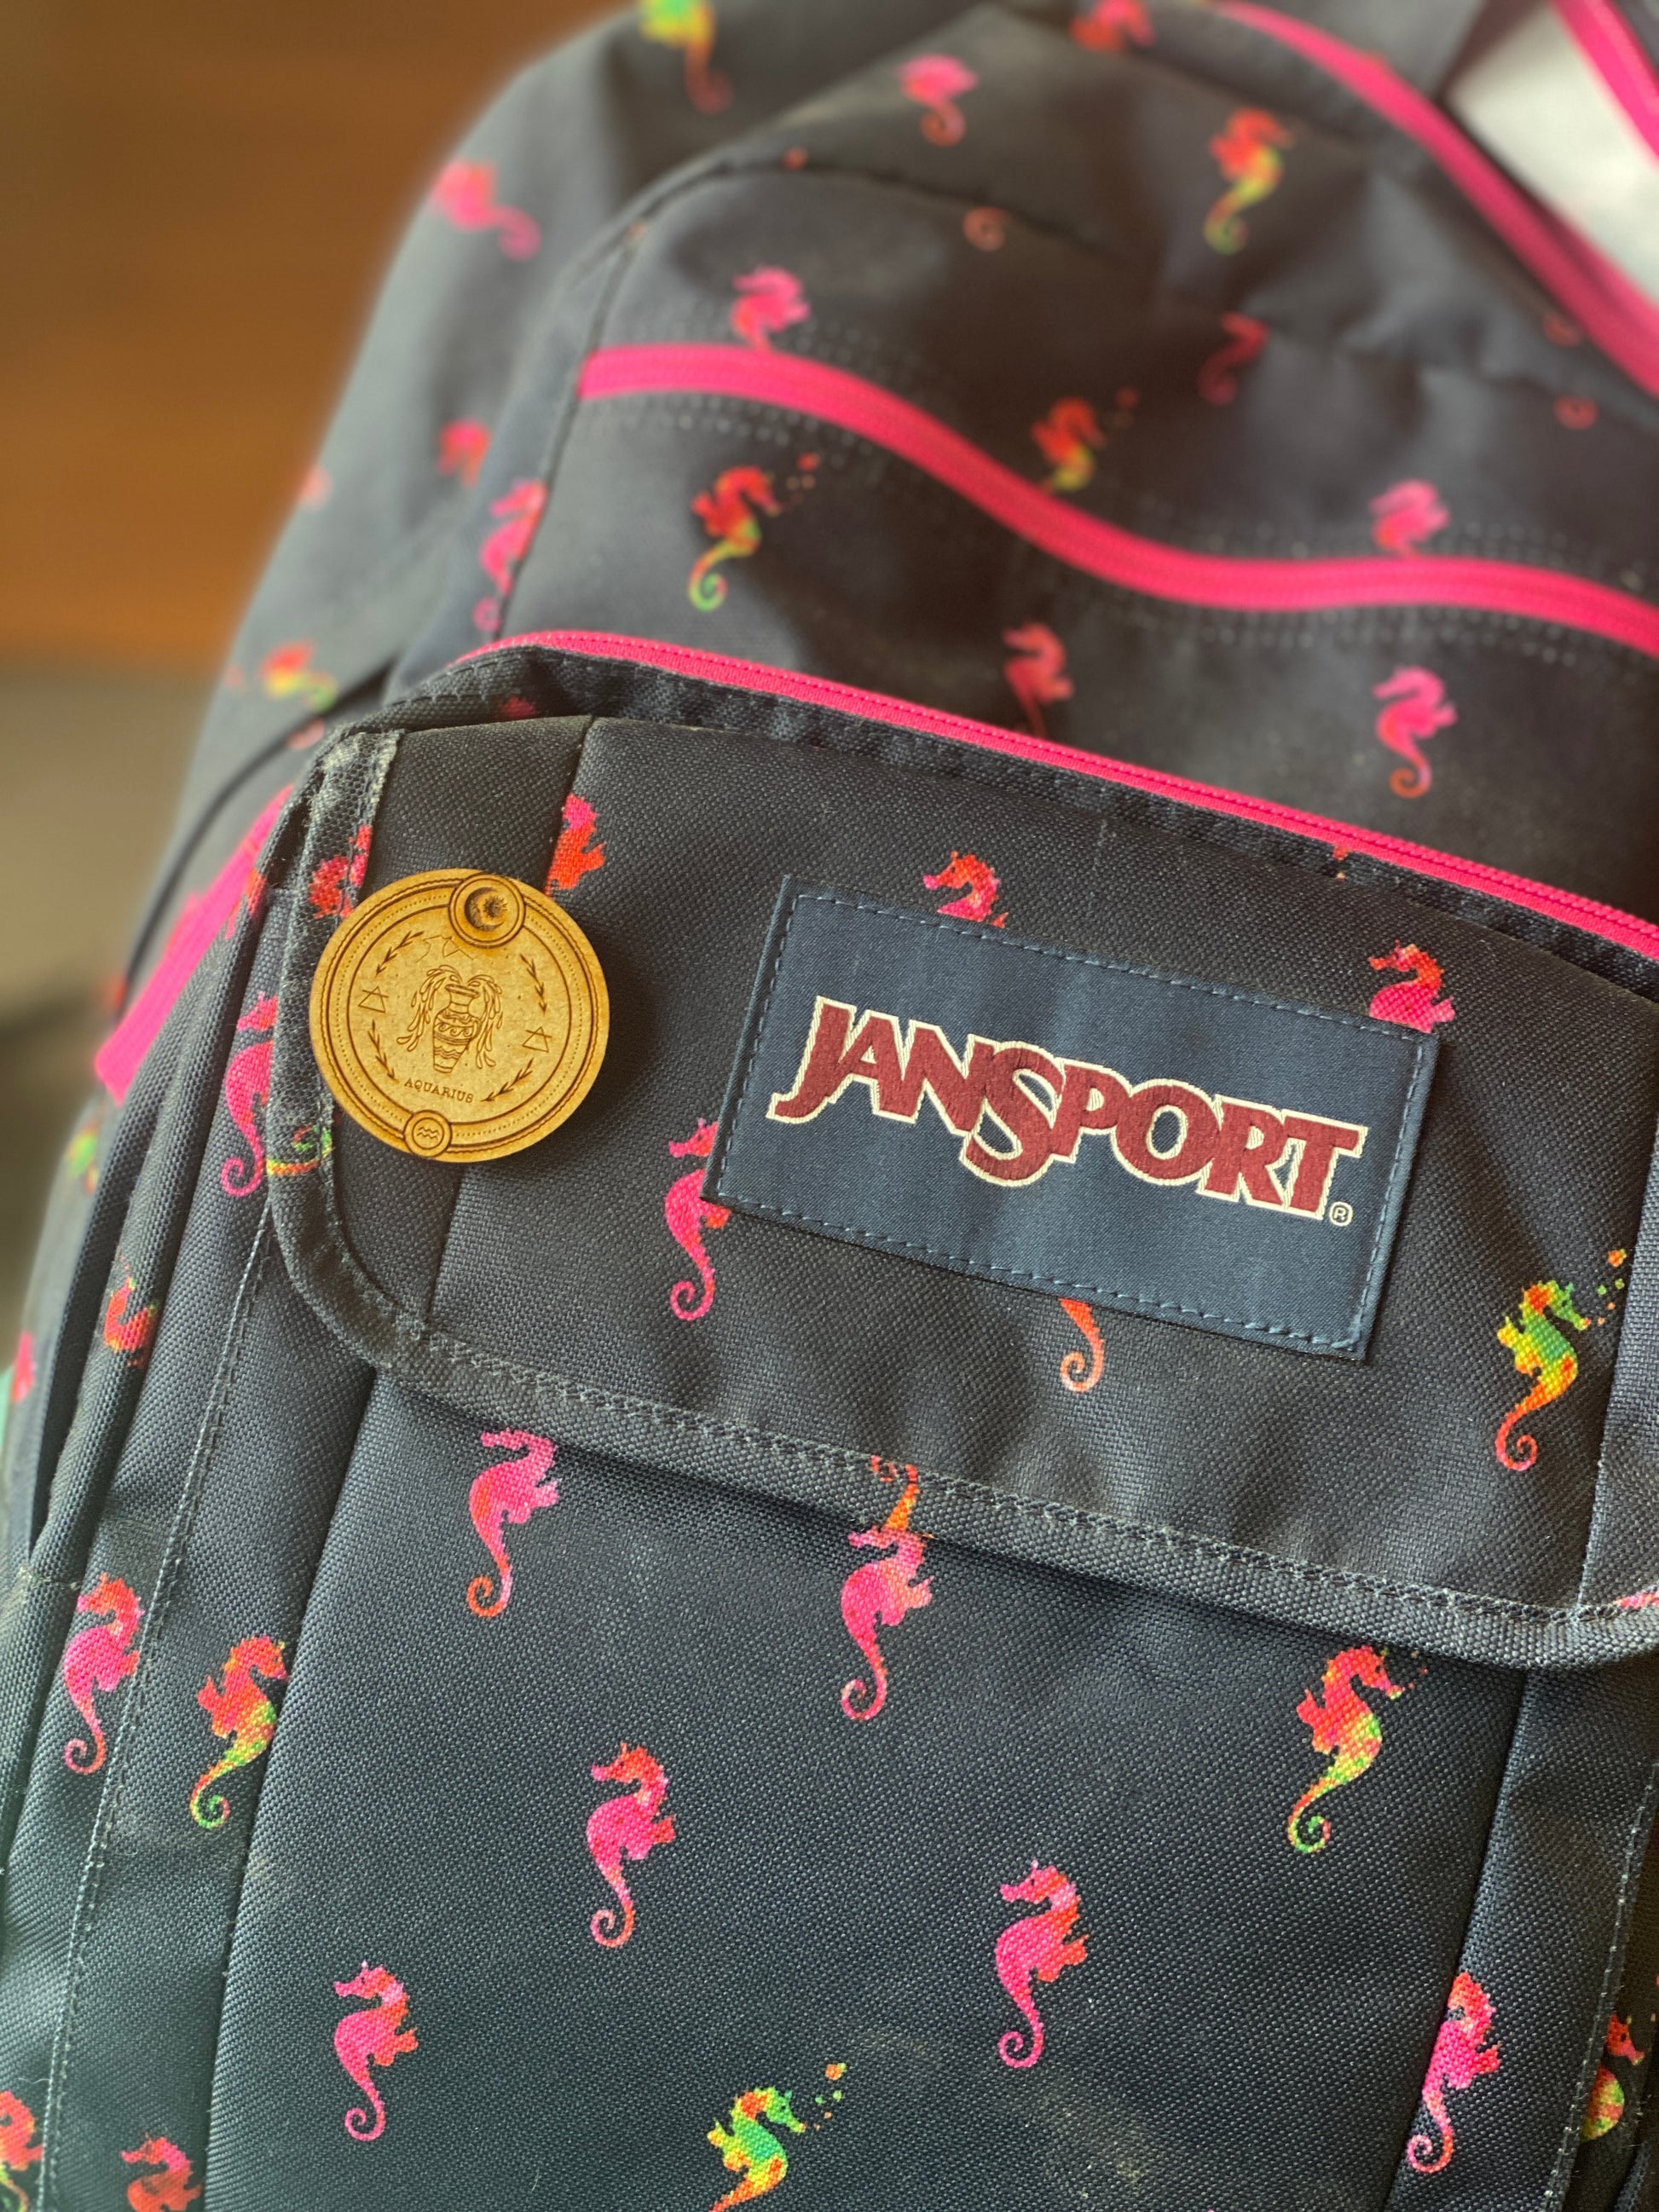 Pin on Jansport Backpacks